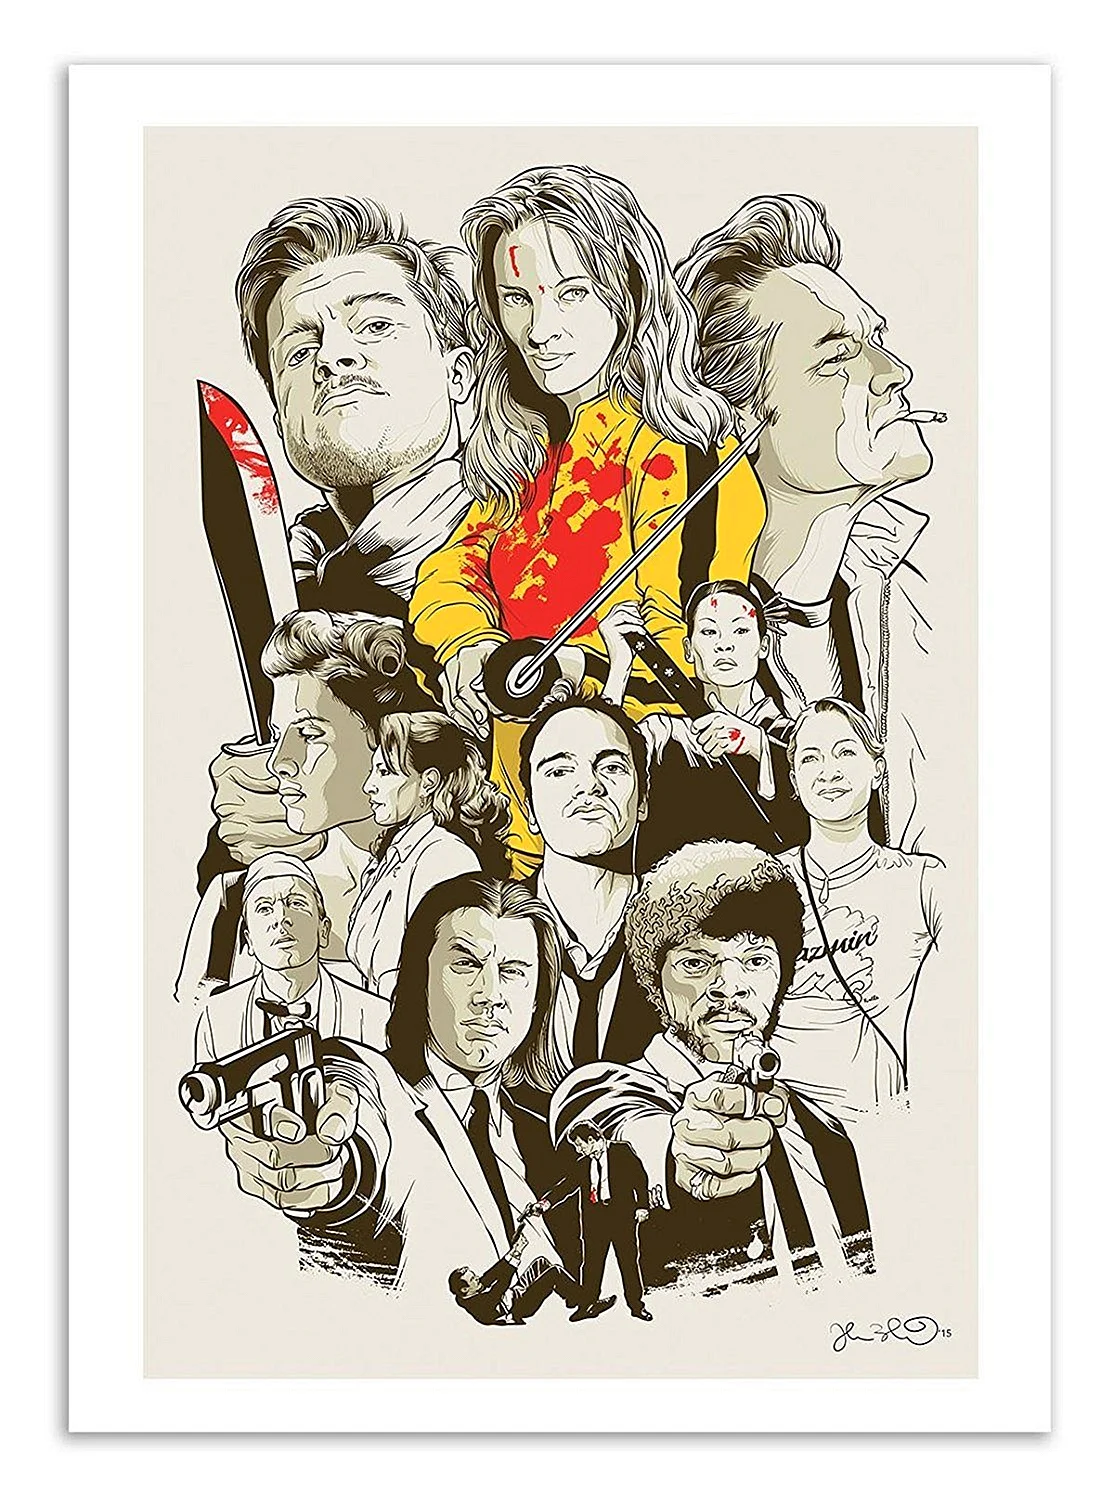 Tarantino Poster Wallpaper For iPhone